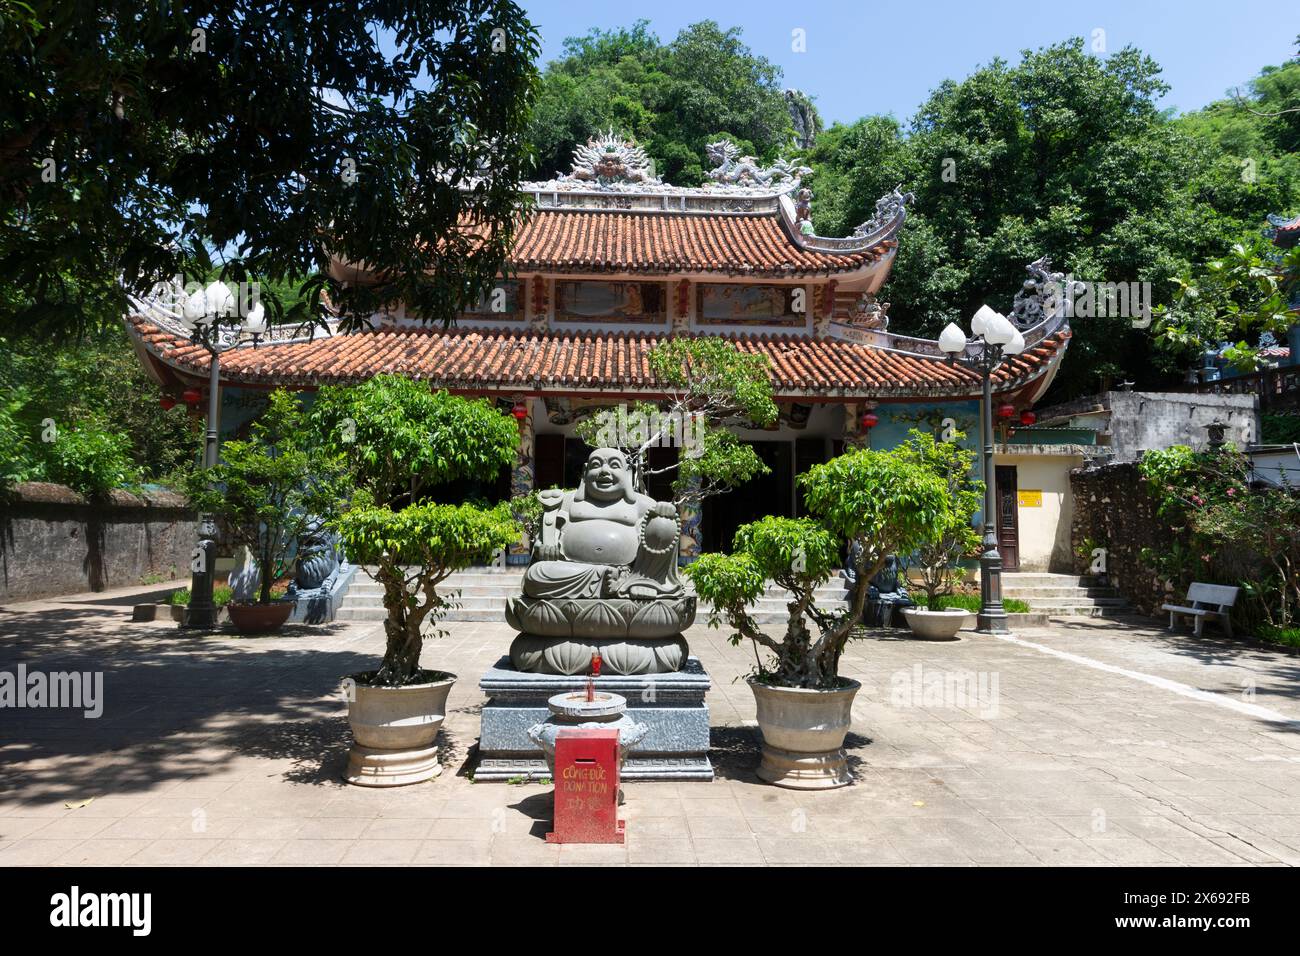 Tempel mit fetten buddha davor Stockfoto